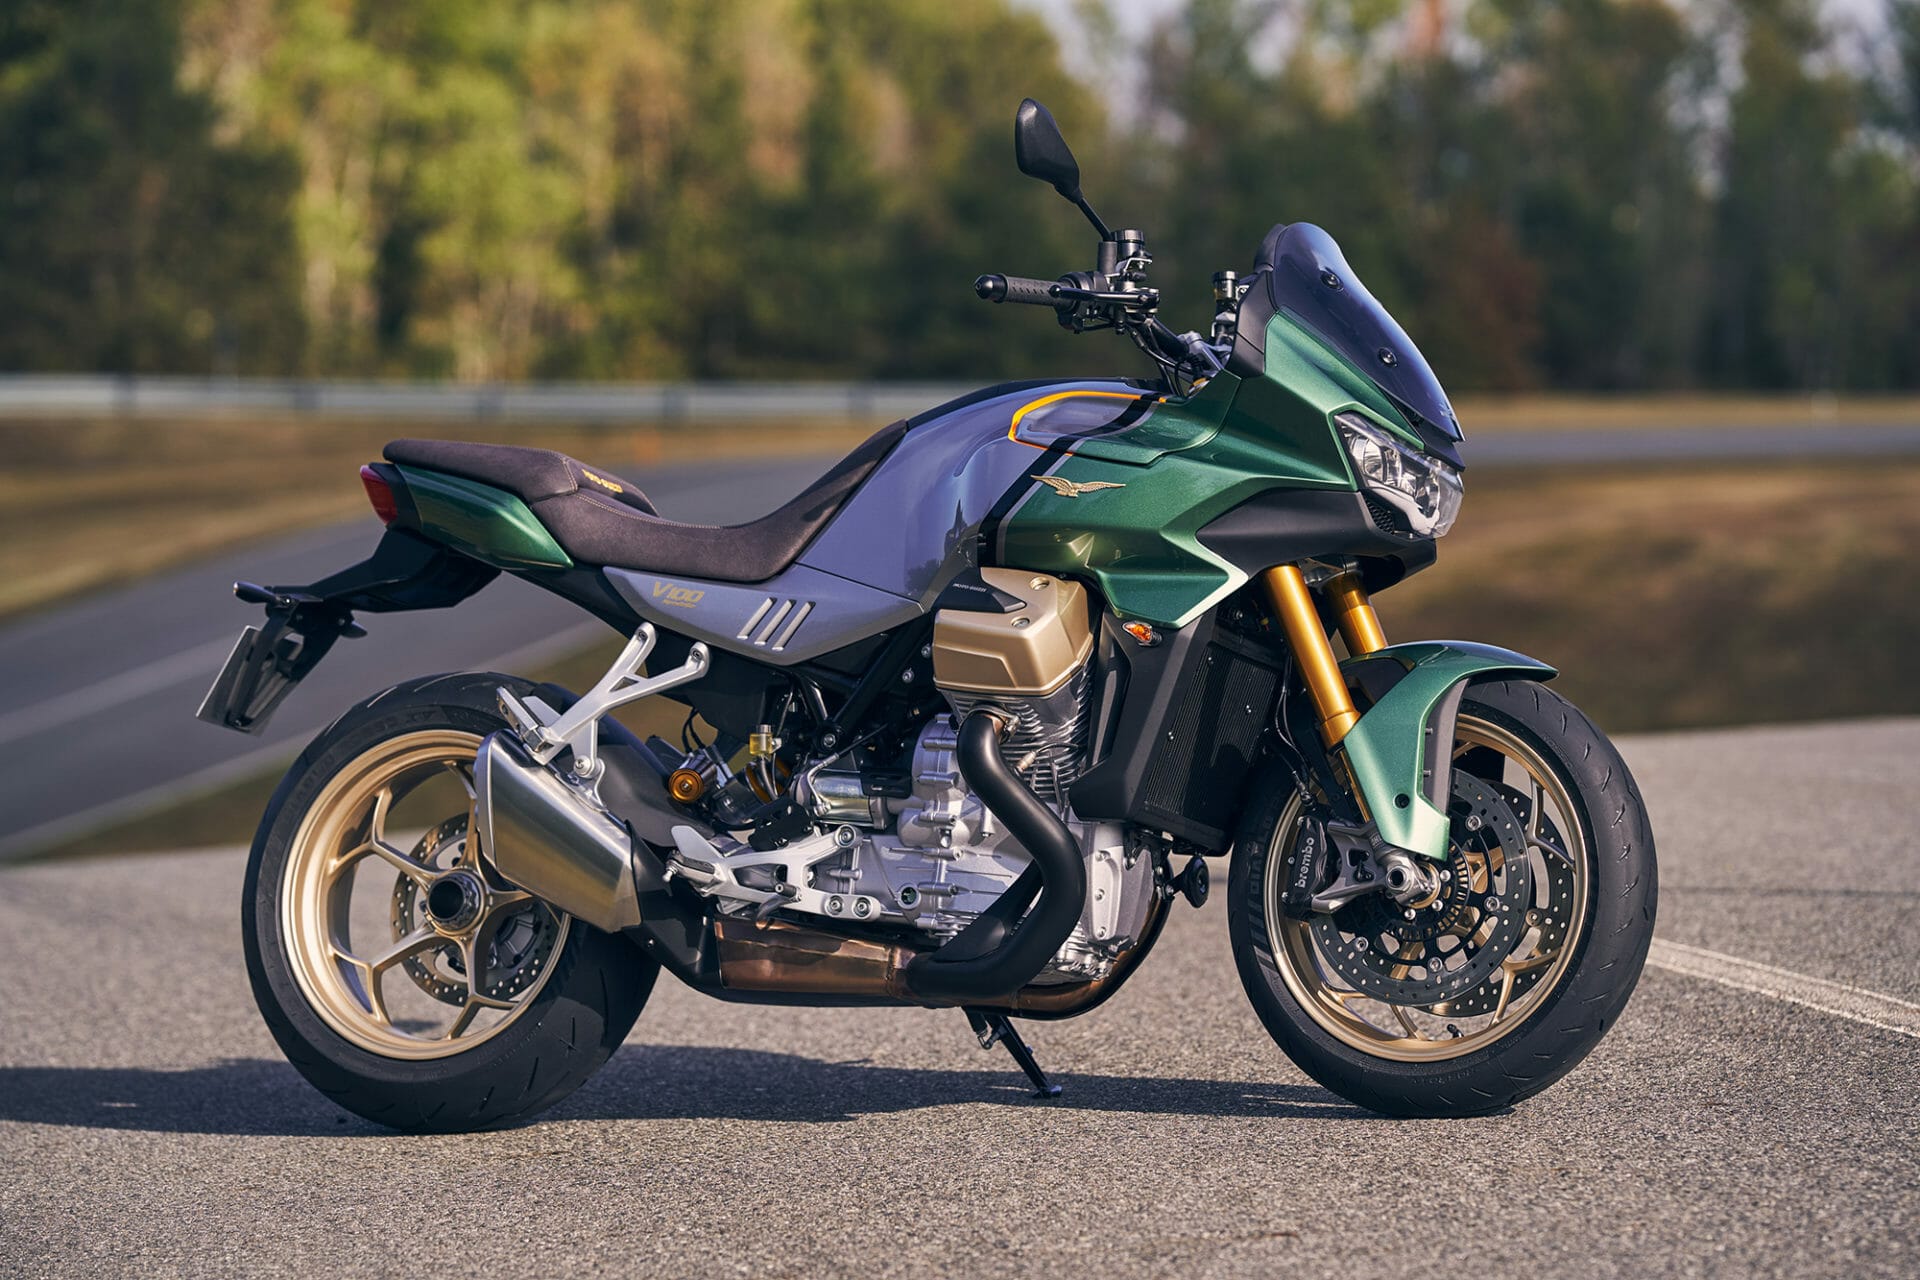 Moto Guzzi V100 Mandello
- also in the MOTORCYCLES.NEWS APP